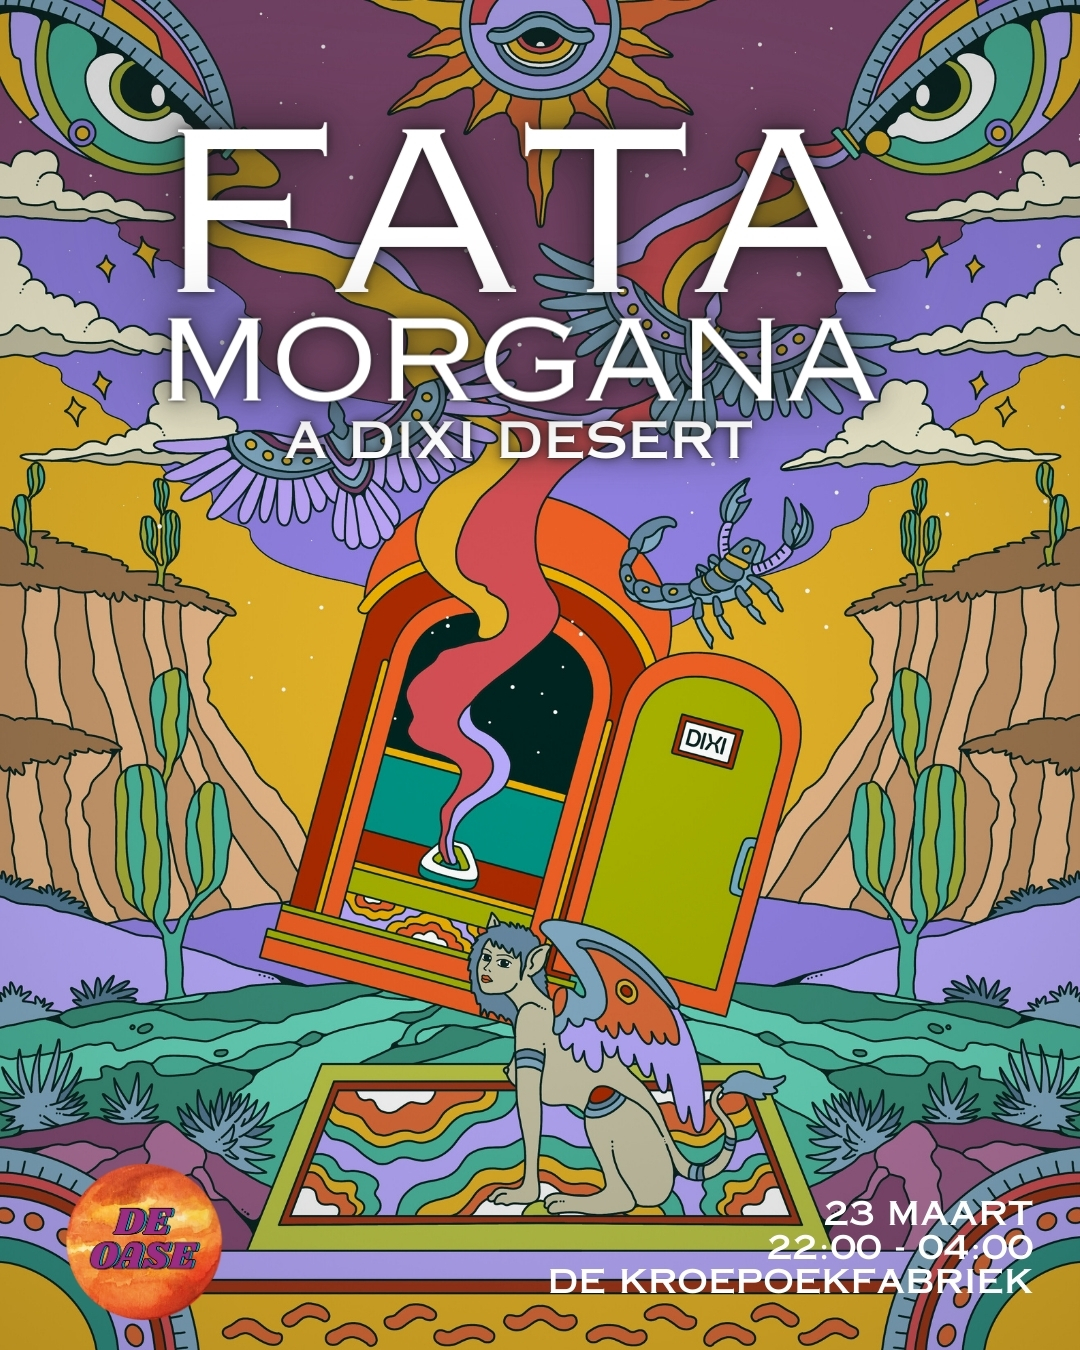 OASE PRESENTS: FATA MORGANA II